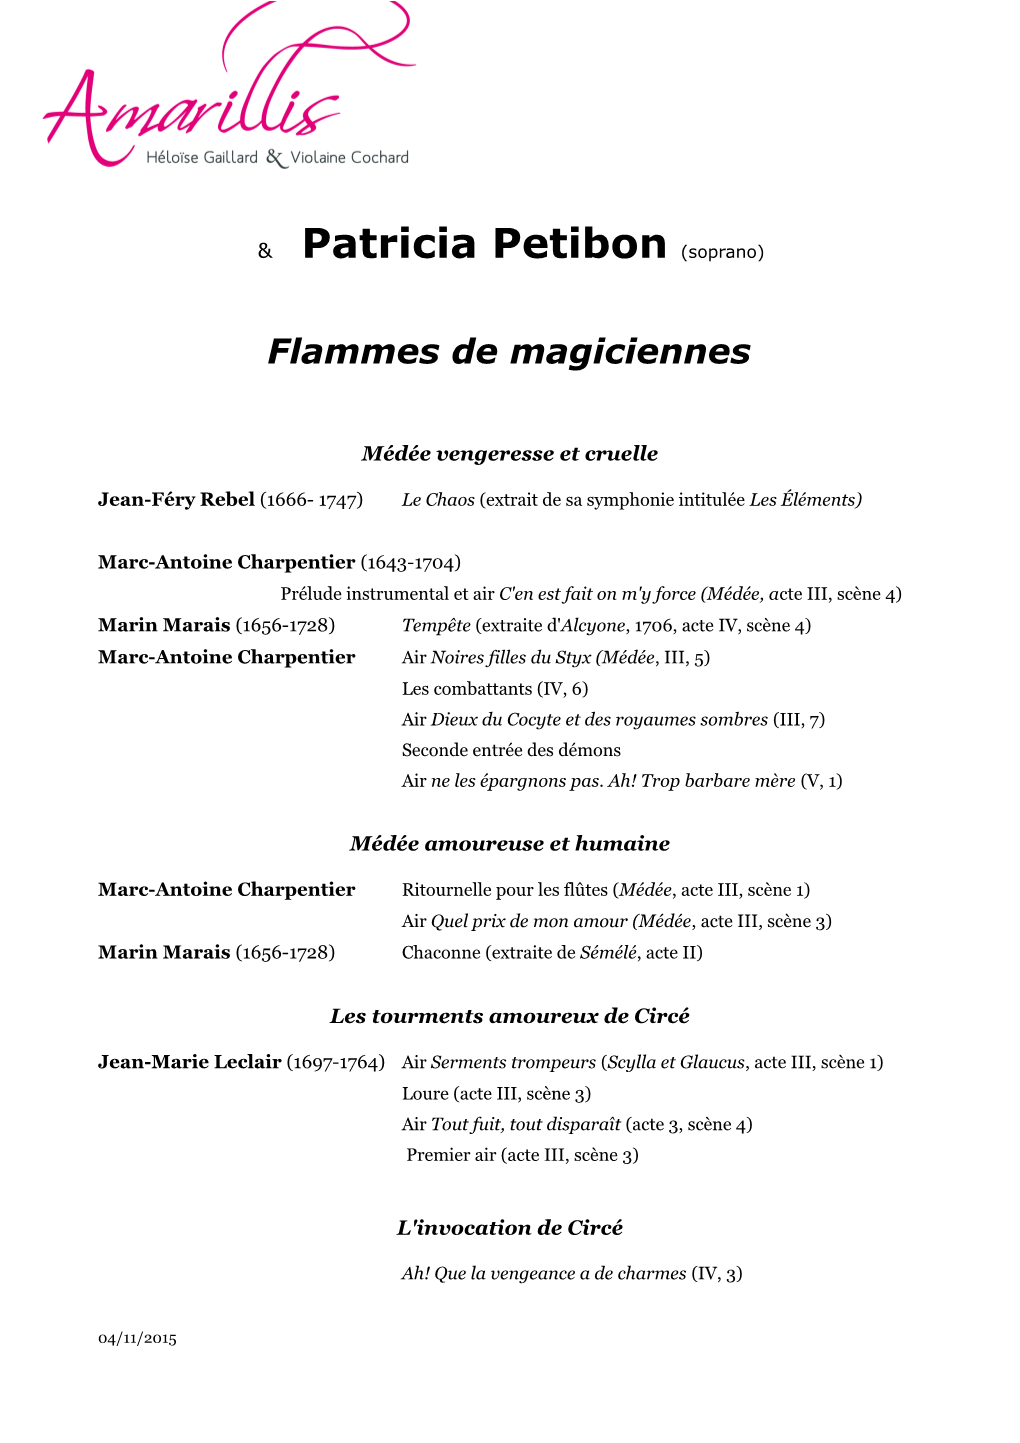 Patricia Petibon (Soprano)